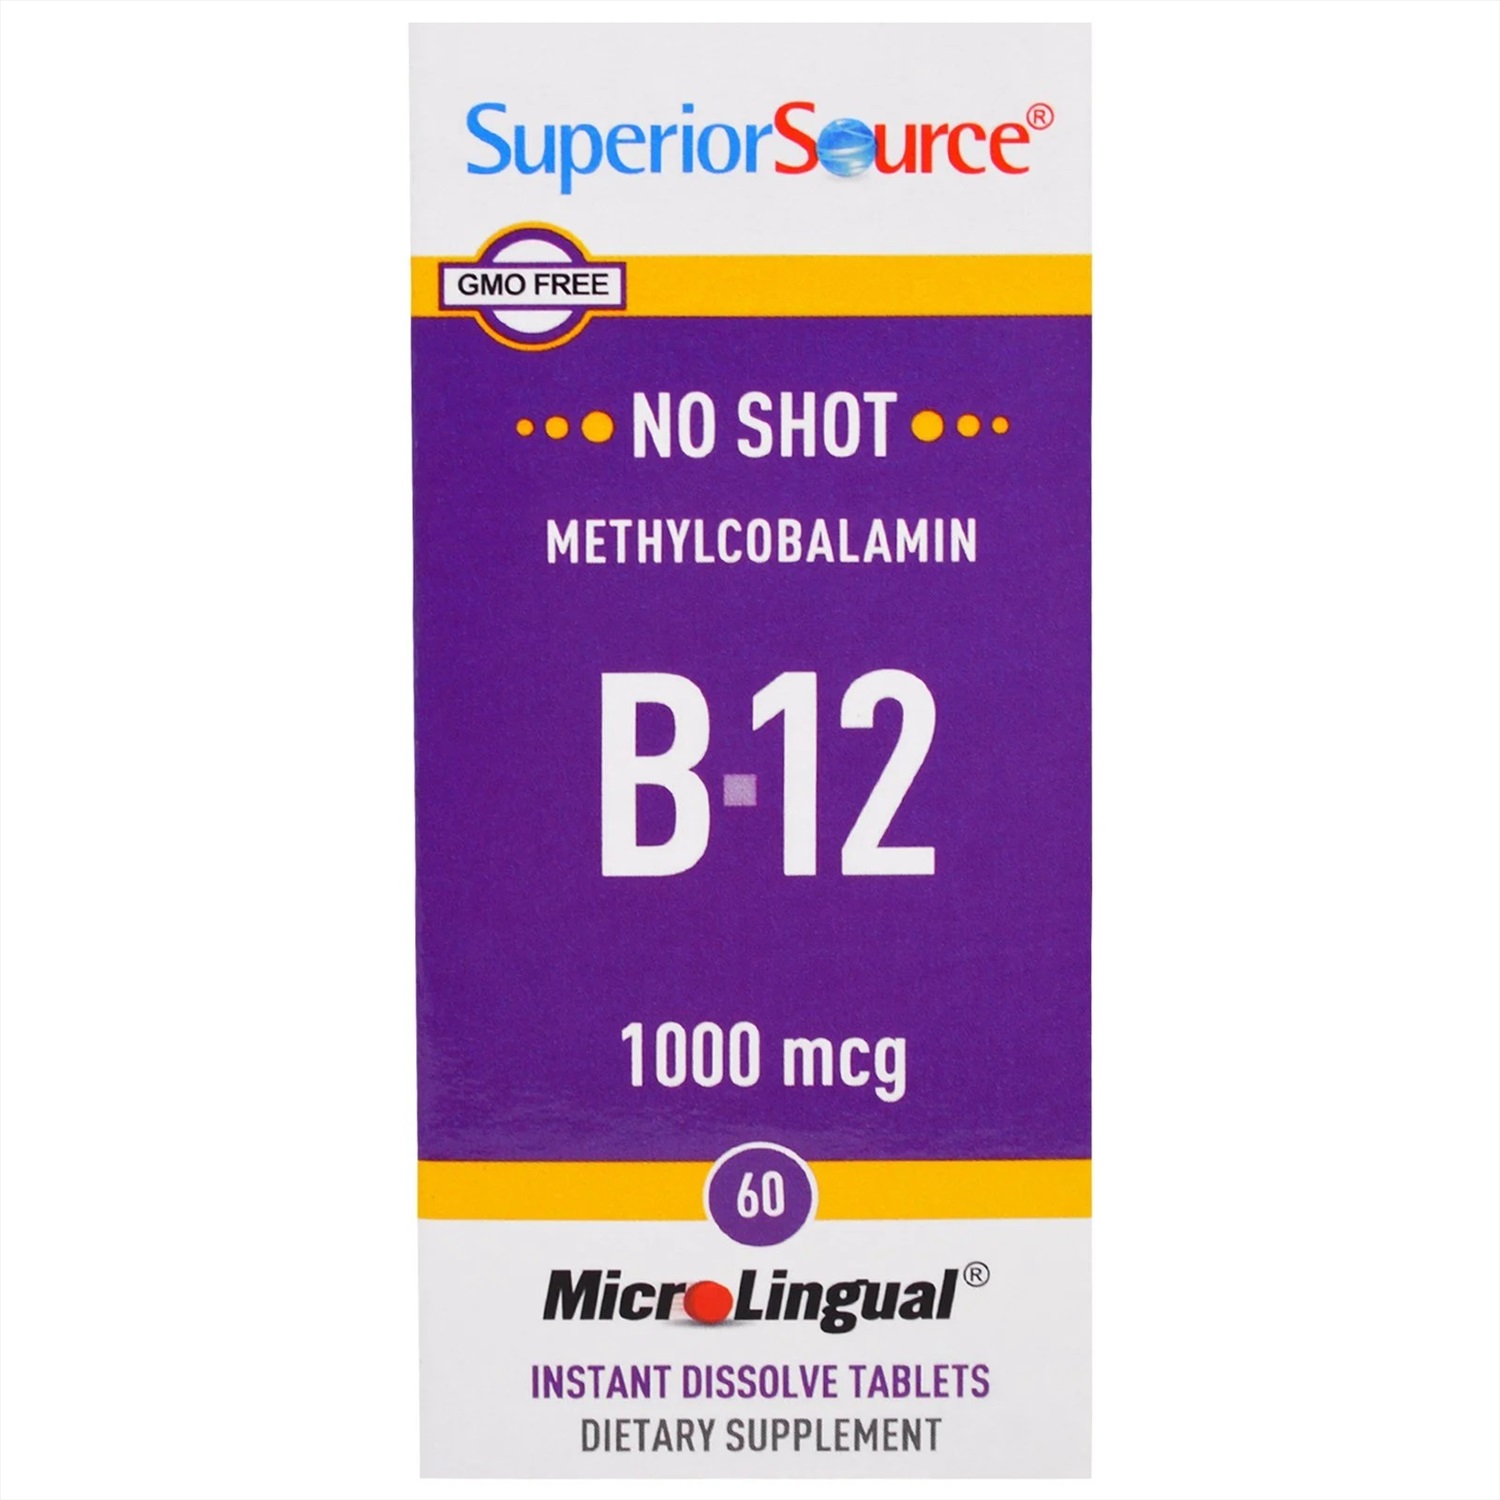 Метилкобаламин 1000 мкг. Метилкобаламин витамин в12. Метилкобаламин b12 1000 мкг. Метилкобаламин b12 5000 MCG. B12 пастилки метилкобаламин.